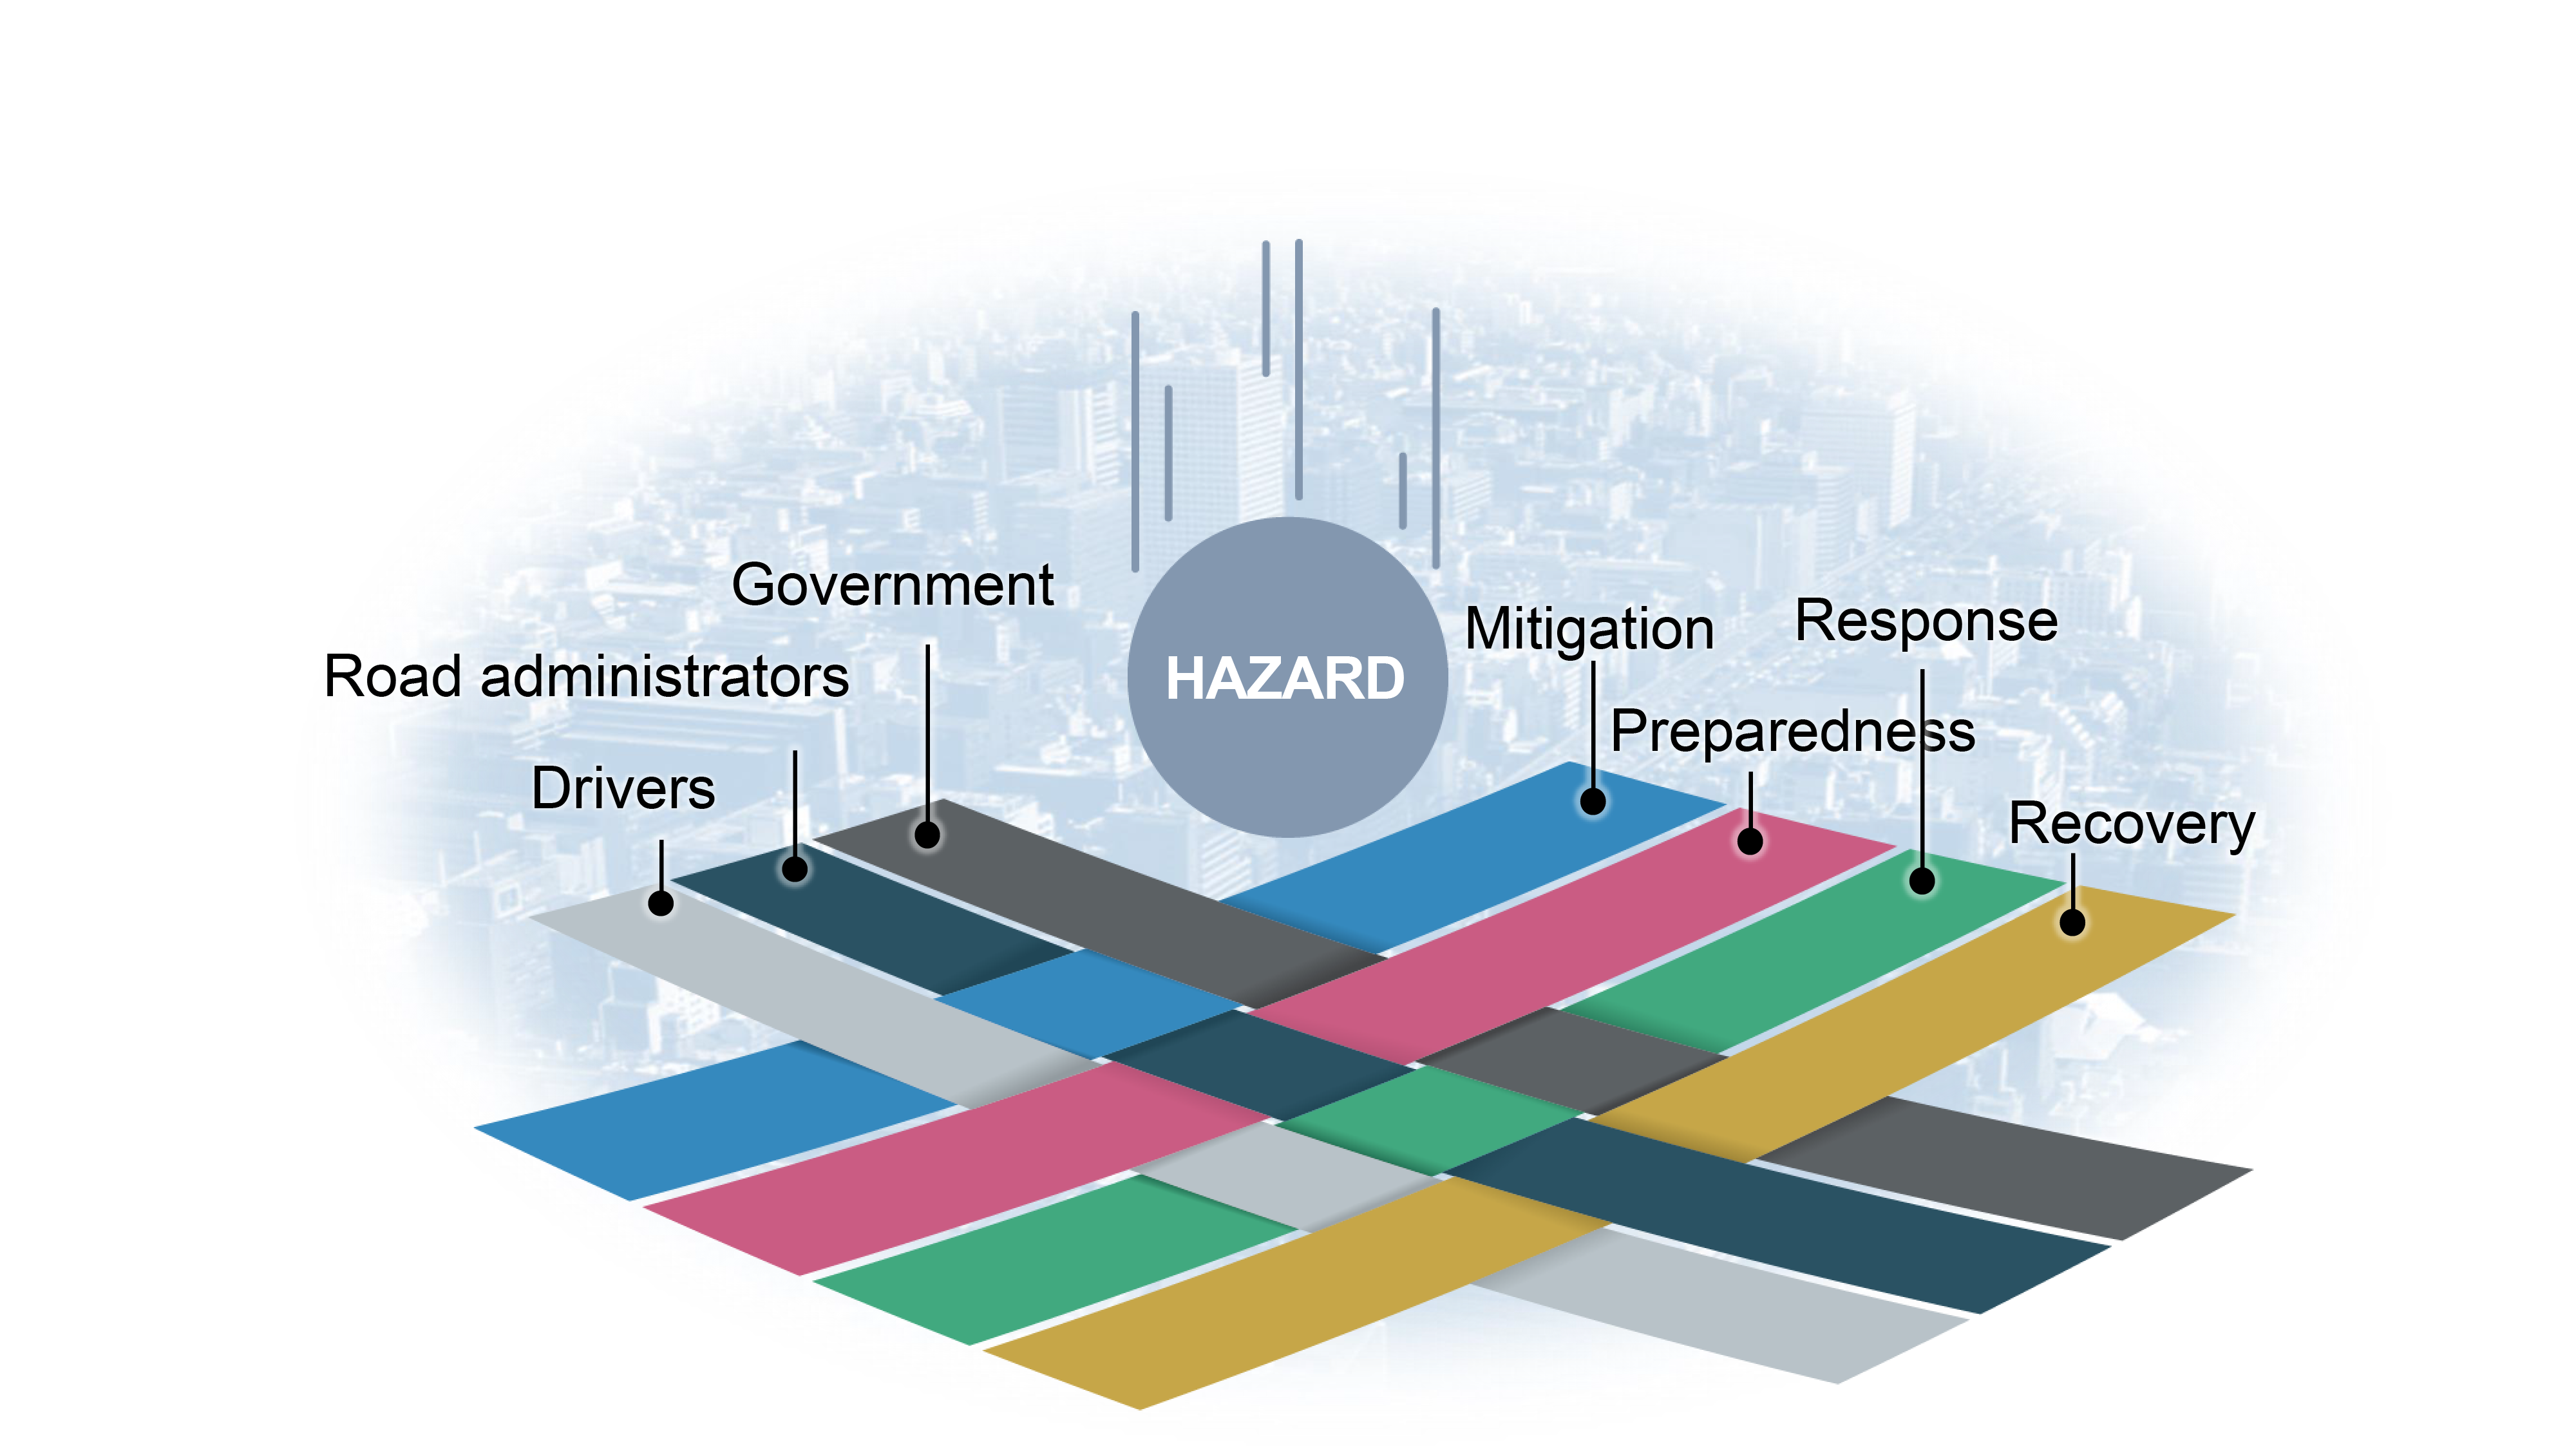 Figure 3.1 Disaster management coordination